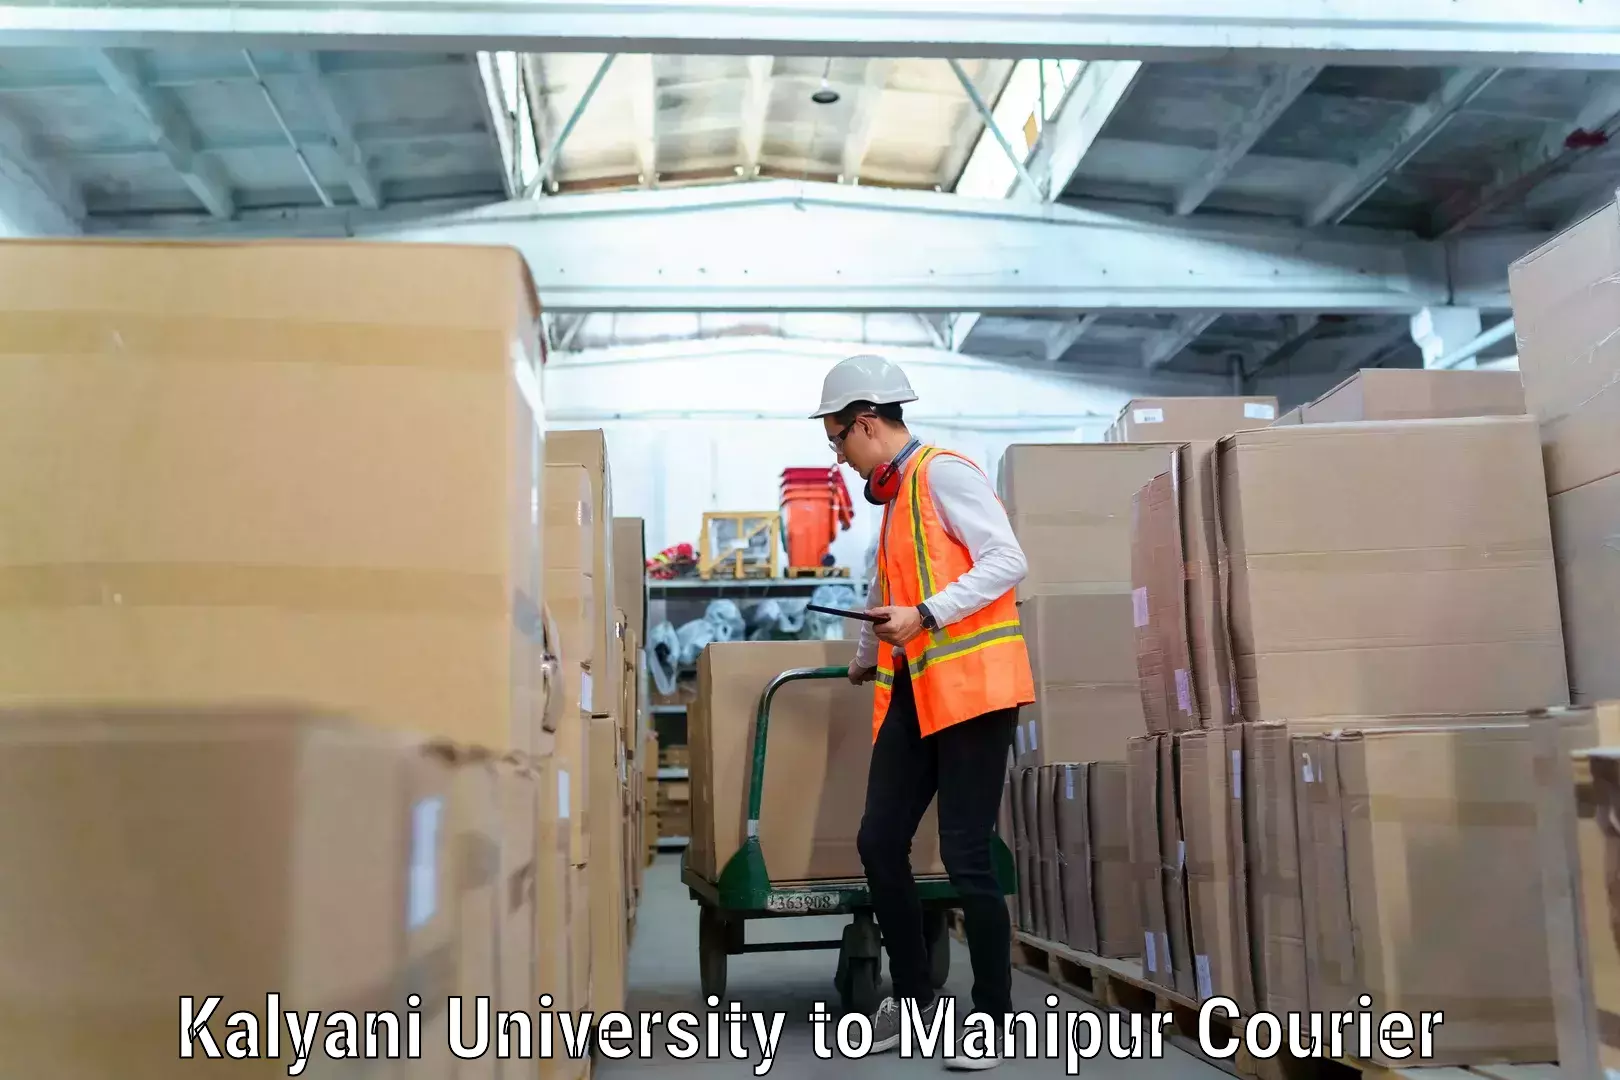 Furniture moving specialists Kalyani University to Manipur